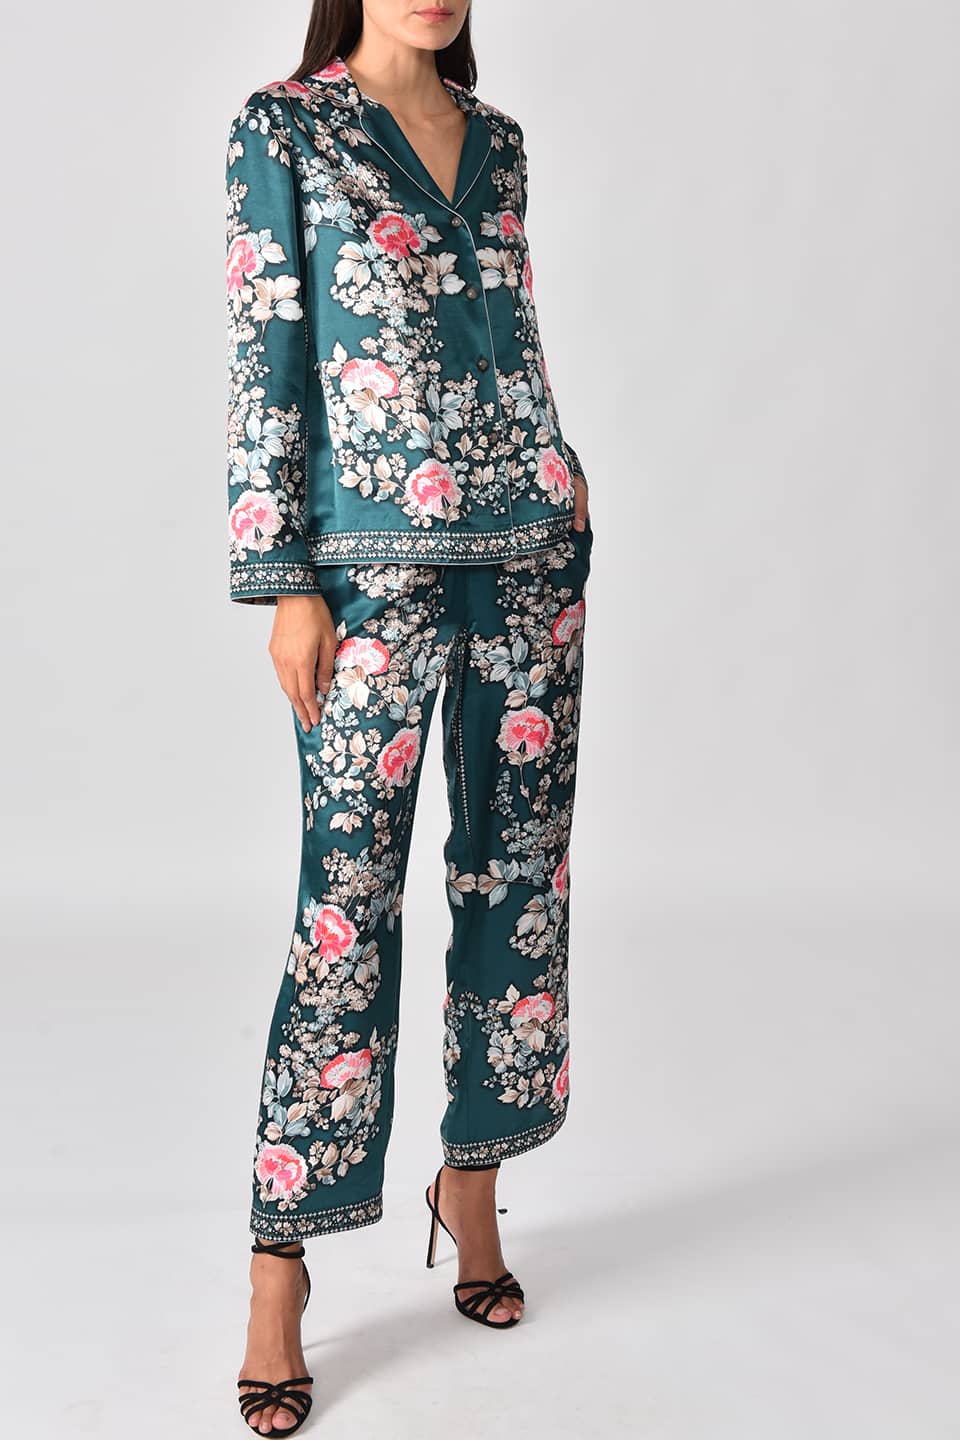 Thumbnail for Product gallery 5, Model wearing satin pyjama style jacket from fashion designer Vilshenko, in full body pose